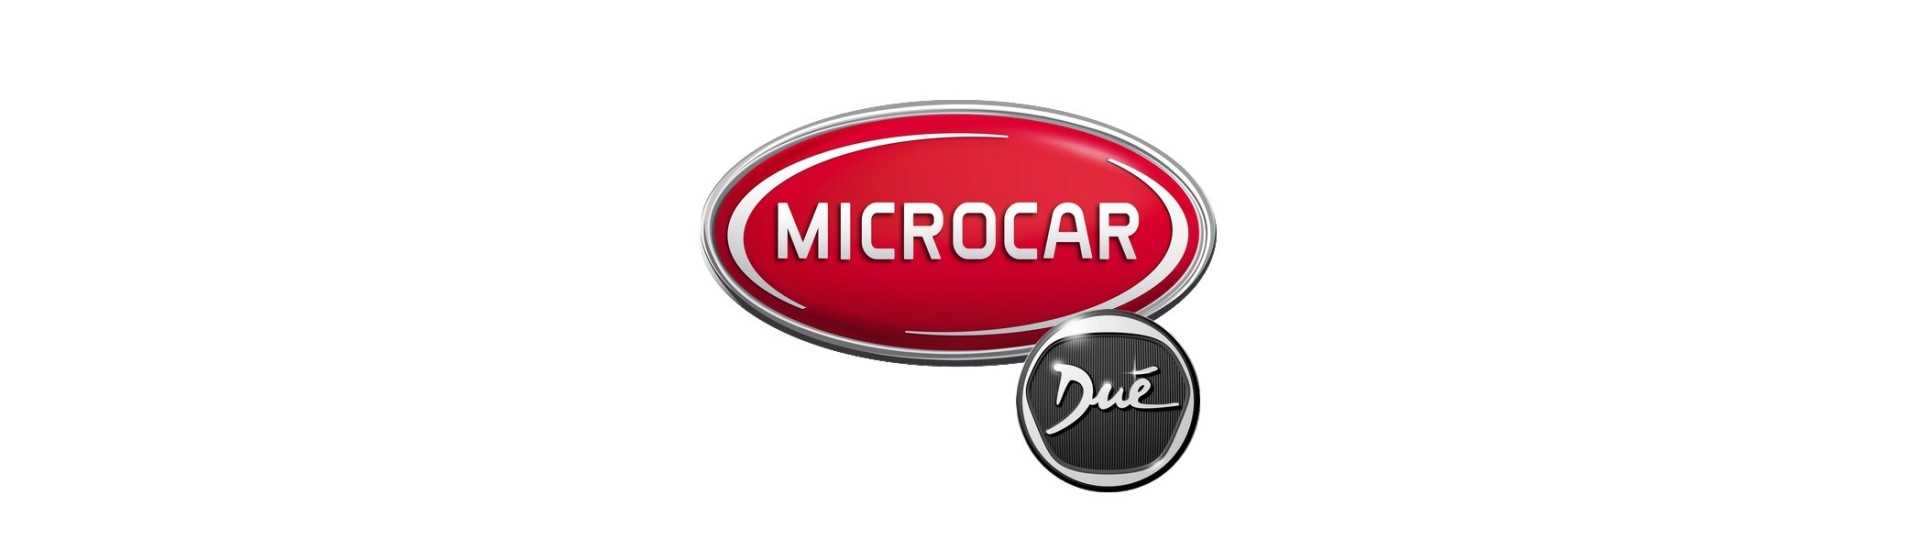 Paras auton hinta ilman lupaa Microcar Dué